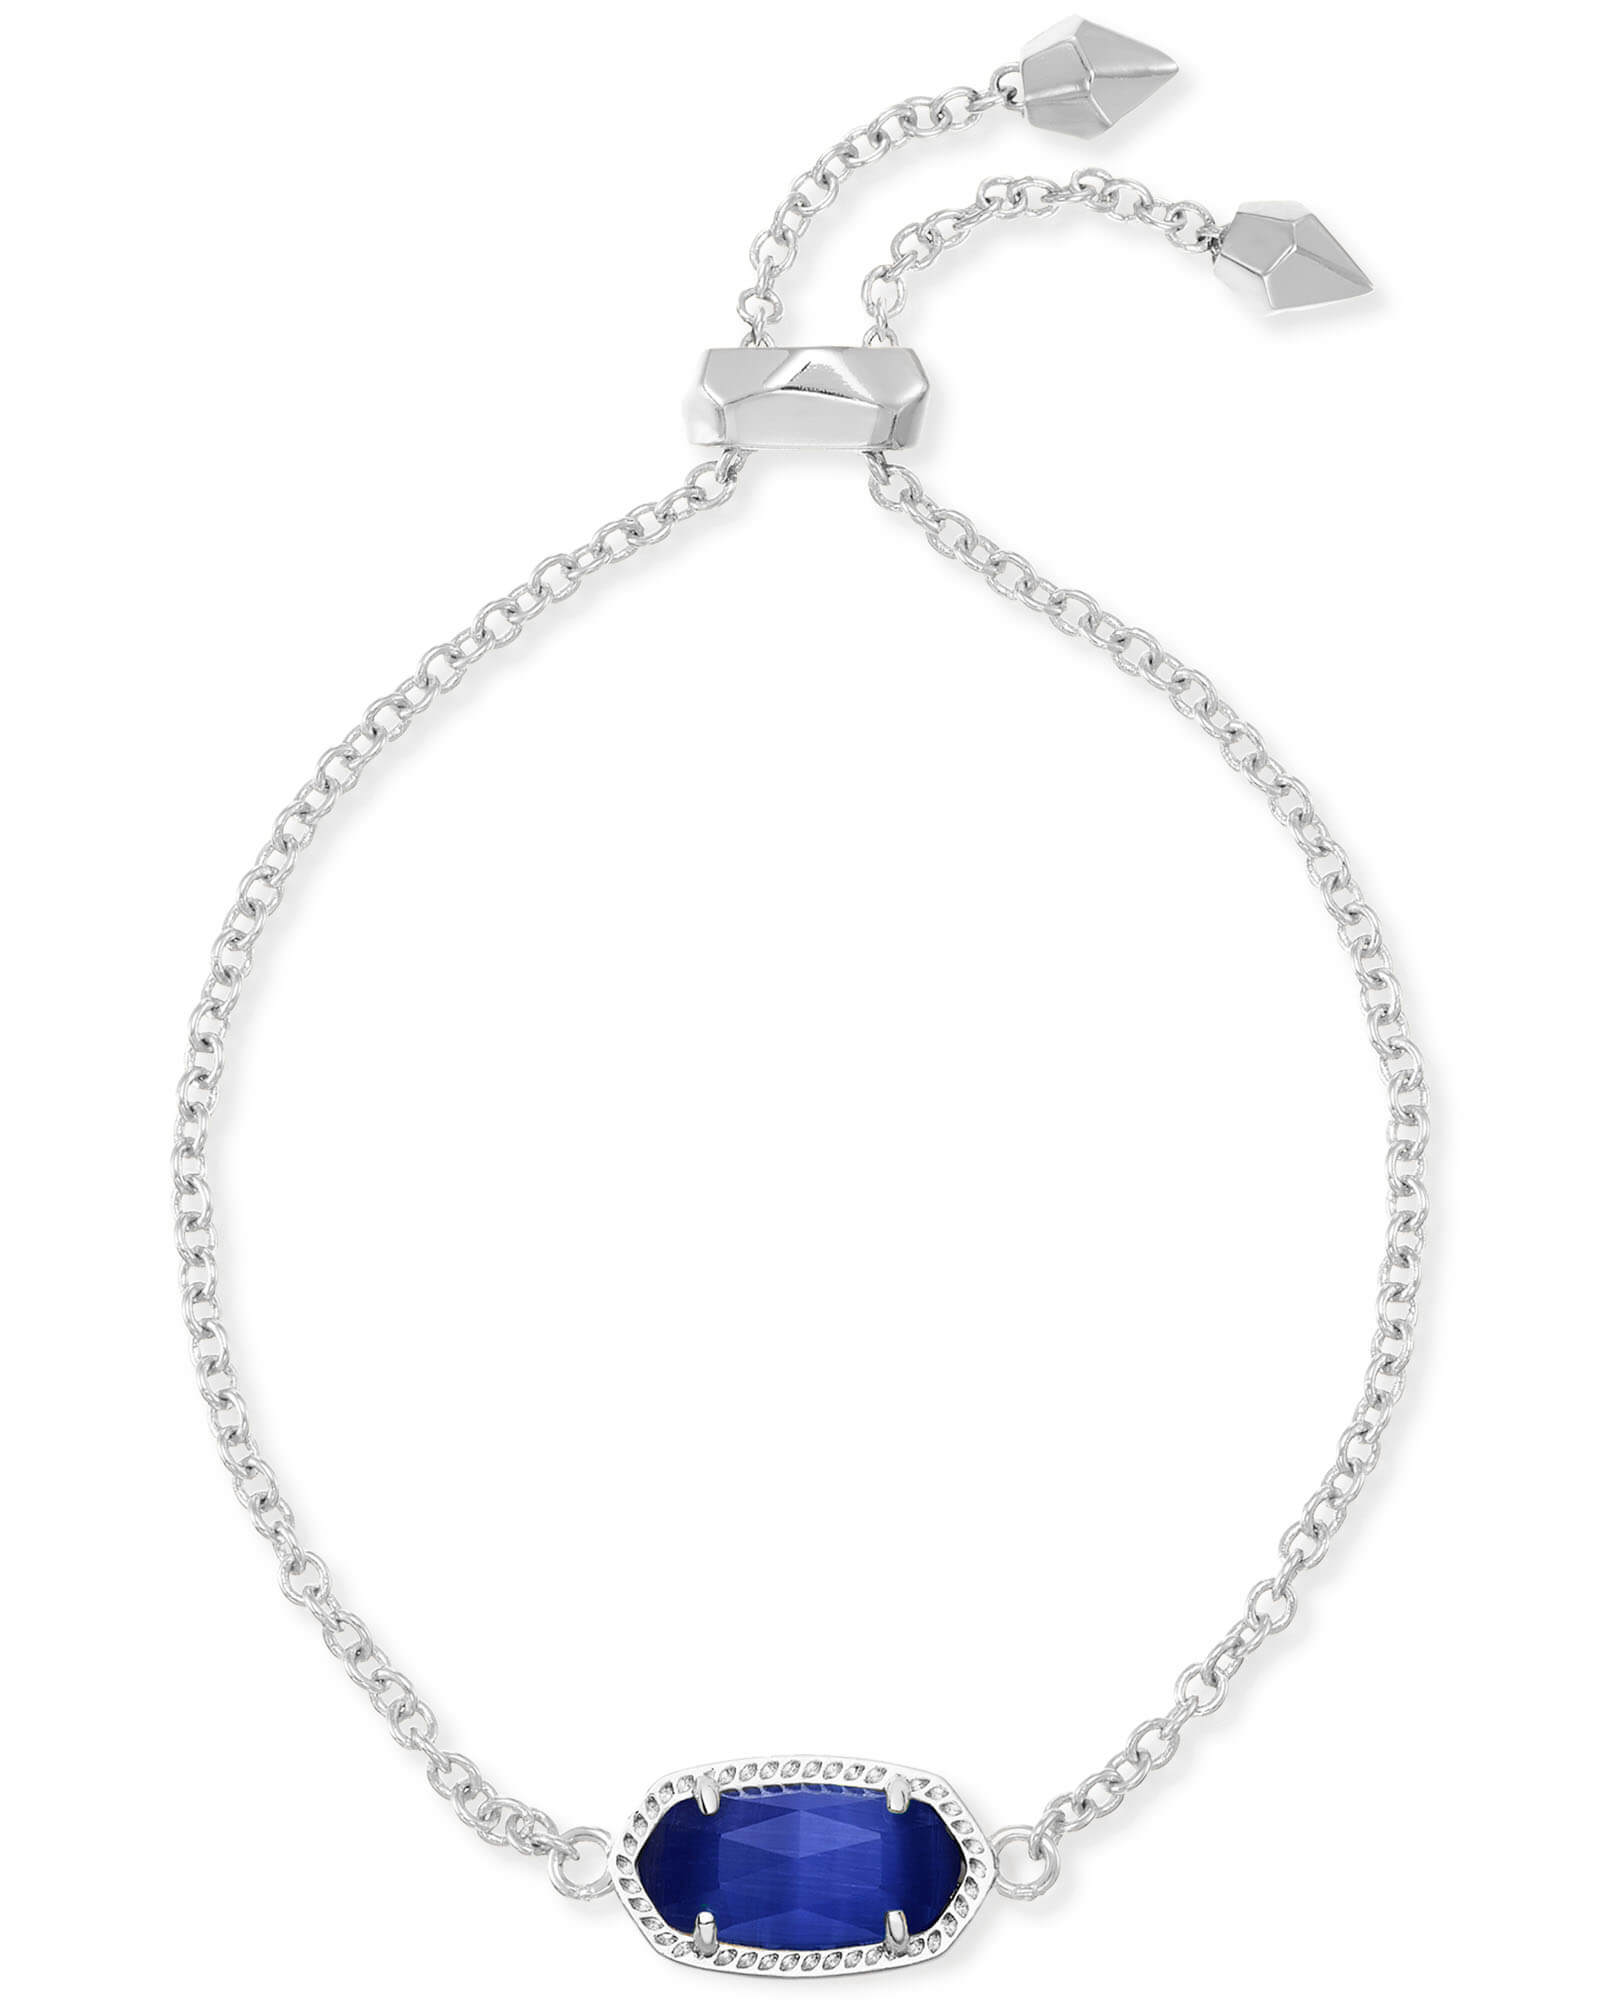 Elaina Silver Adjustable Chain Bracelet in Cobalt Cat’s Eye